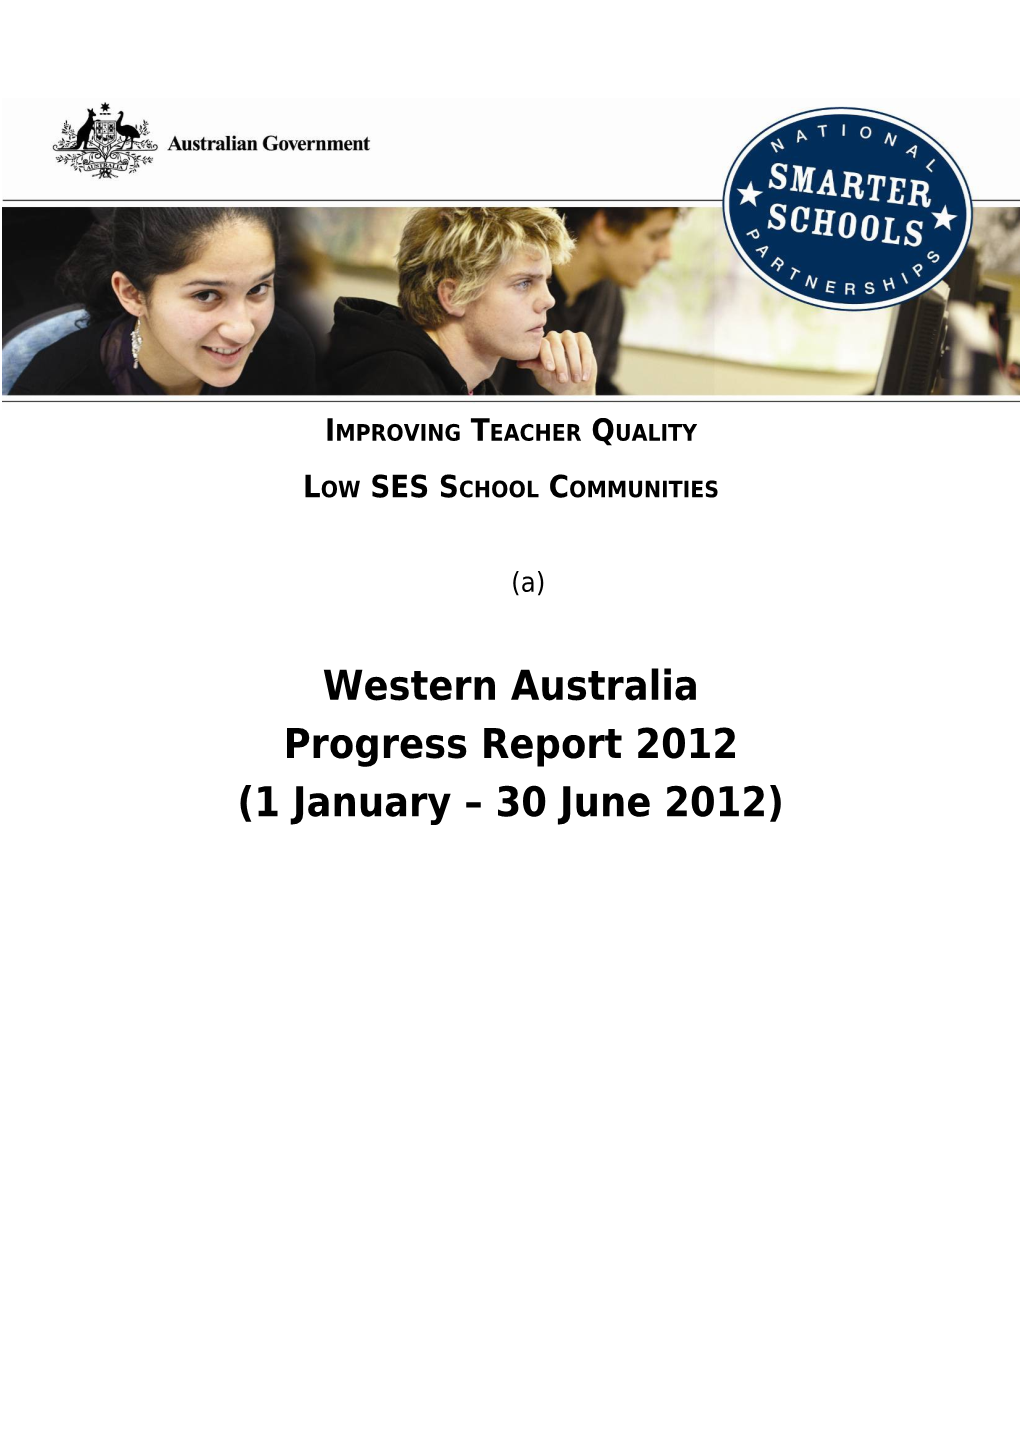 Western Australia Progress Report 2012